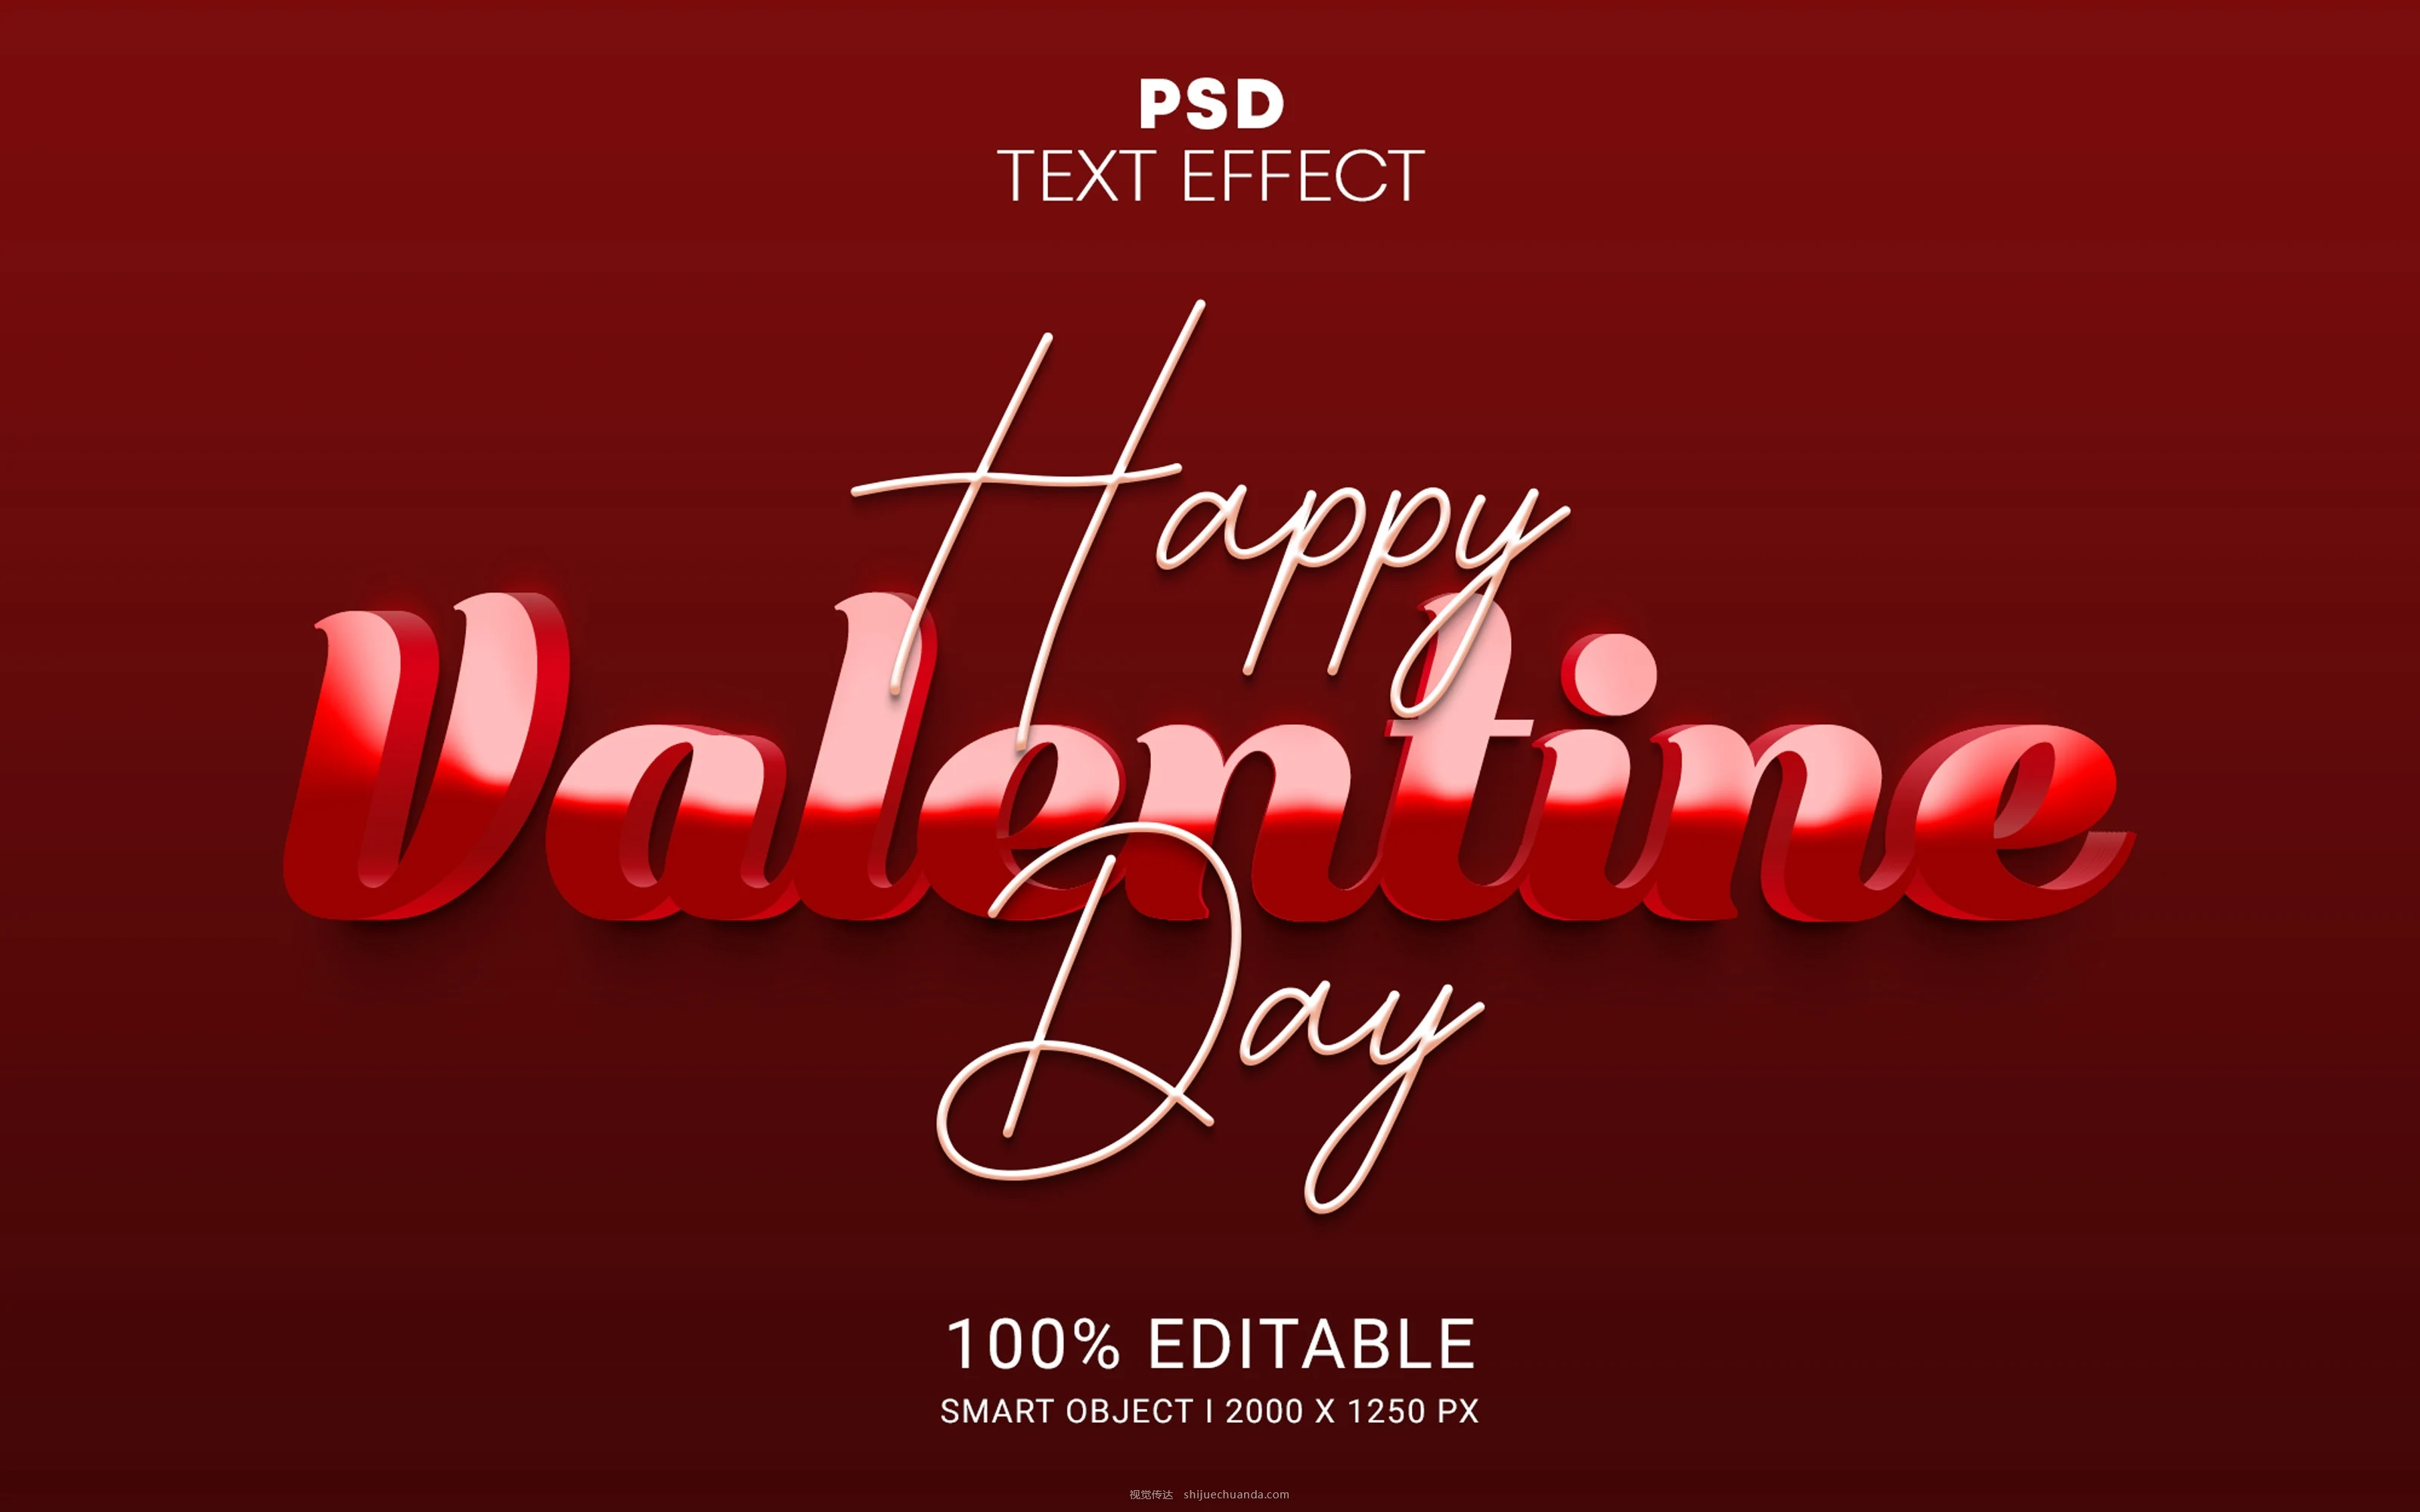 Editable 3D PSD Text Effect Bundle Vol-1-9.jpg